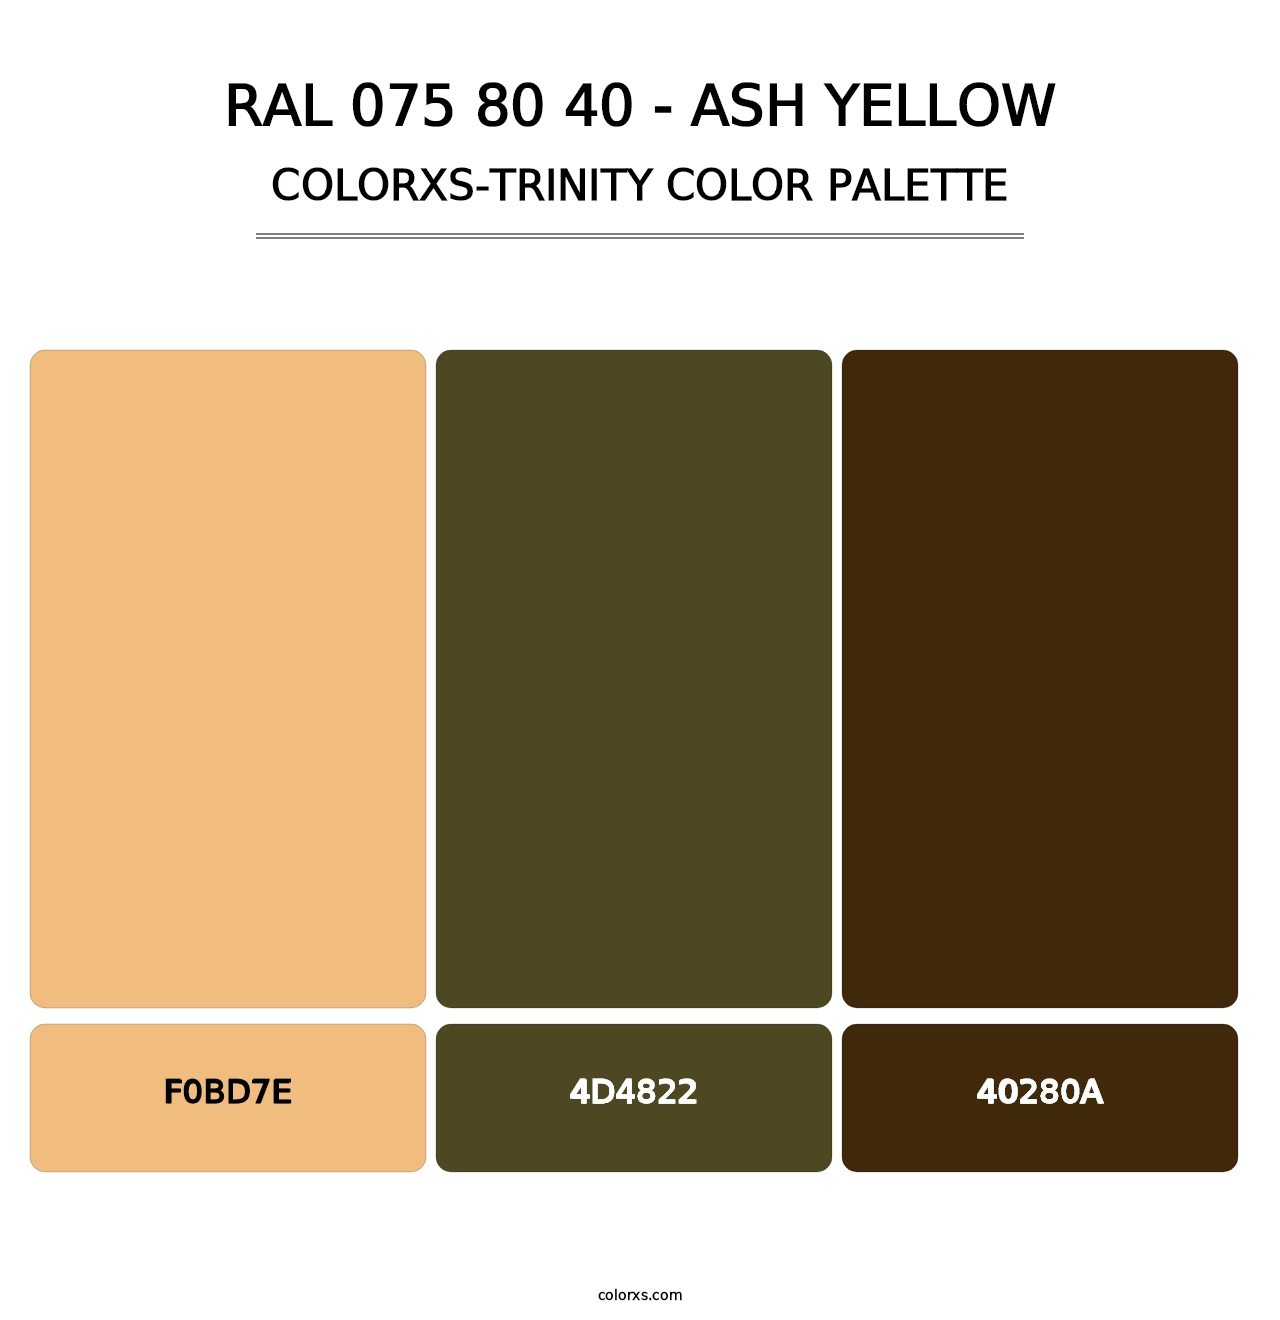 RAL 075 80 40 - Ash Yellow - Colorxs Trinity Palette